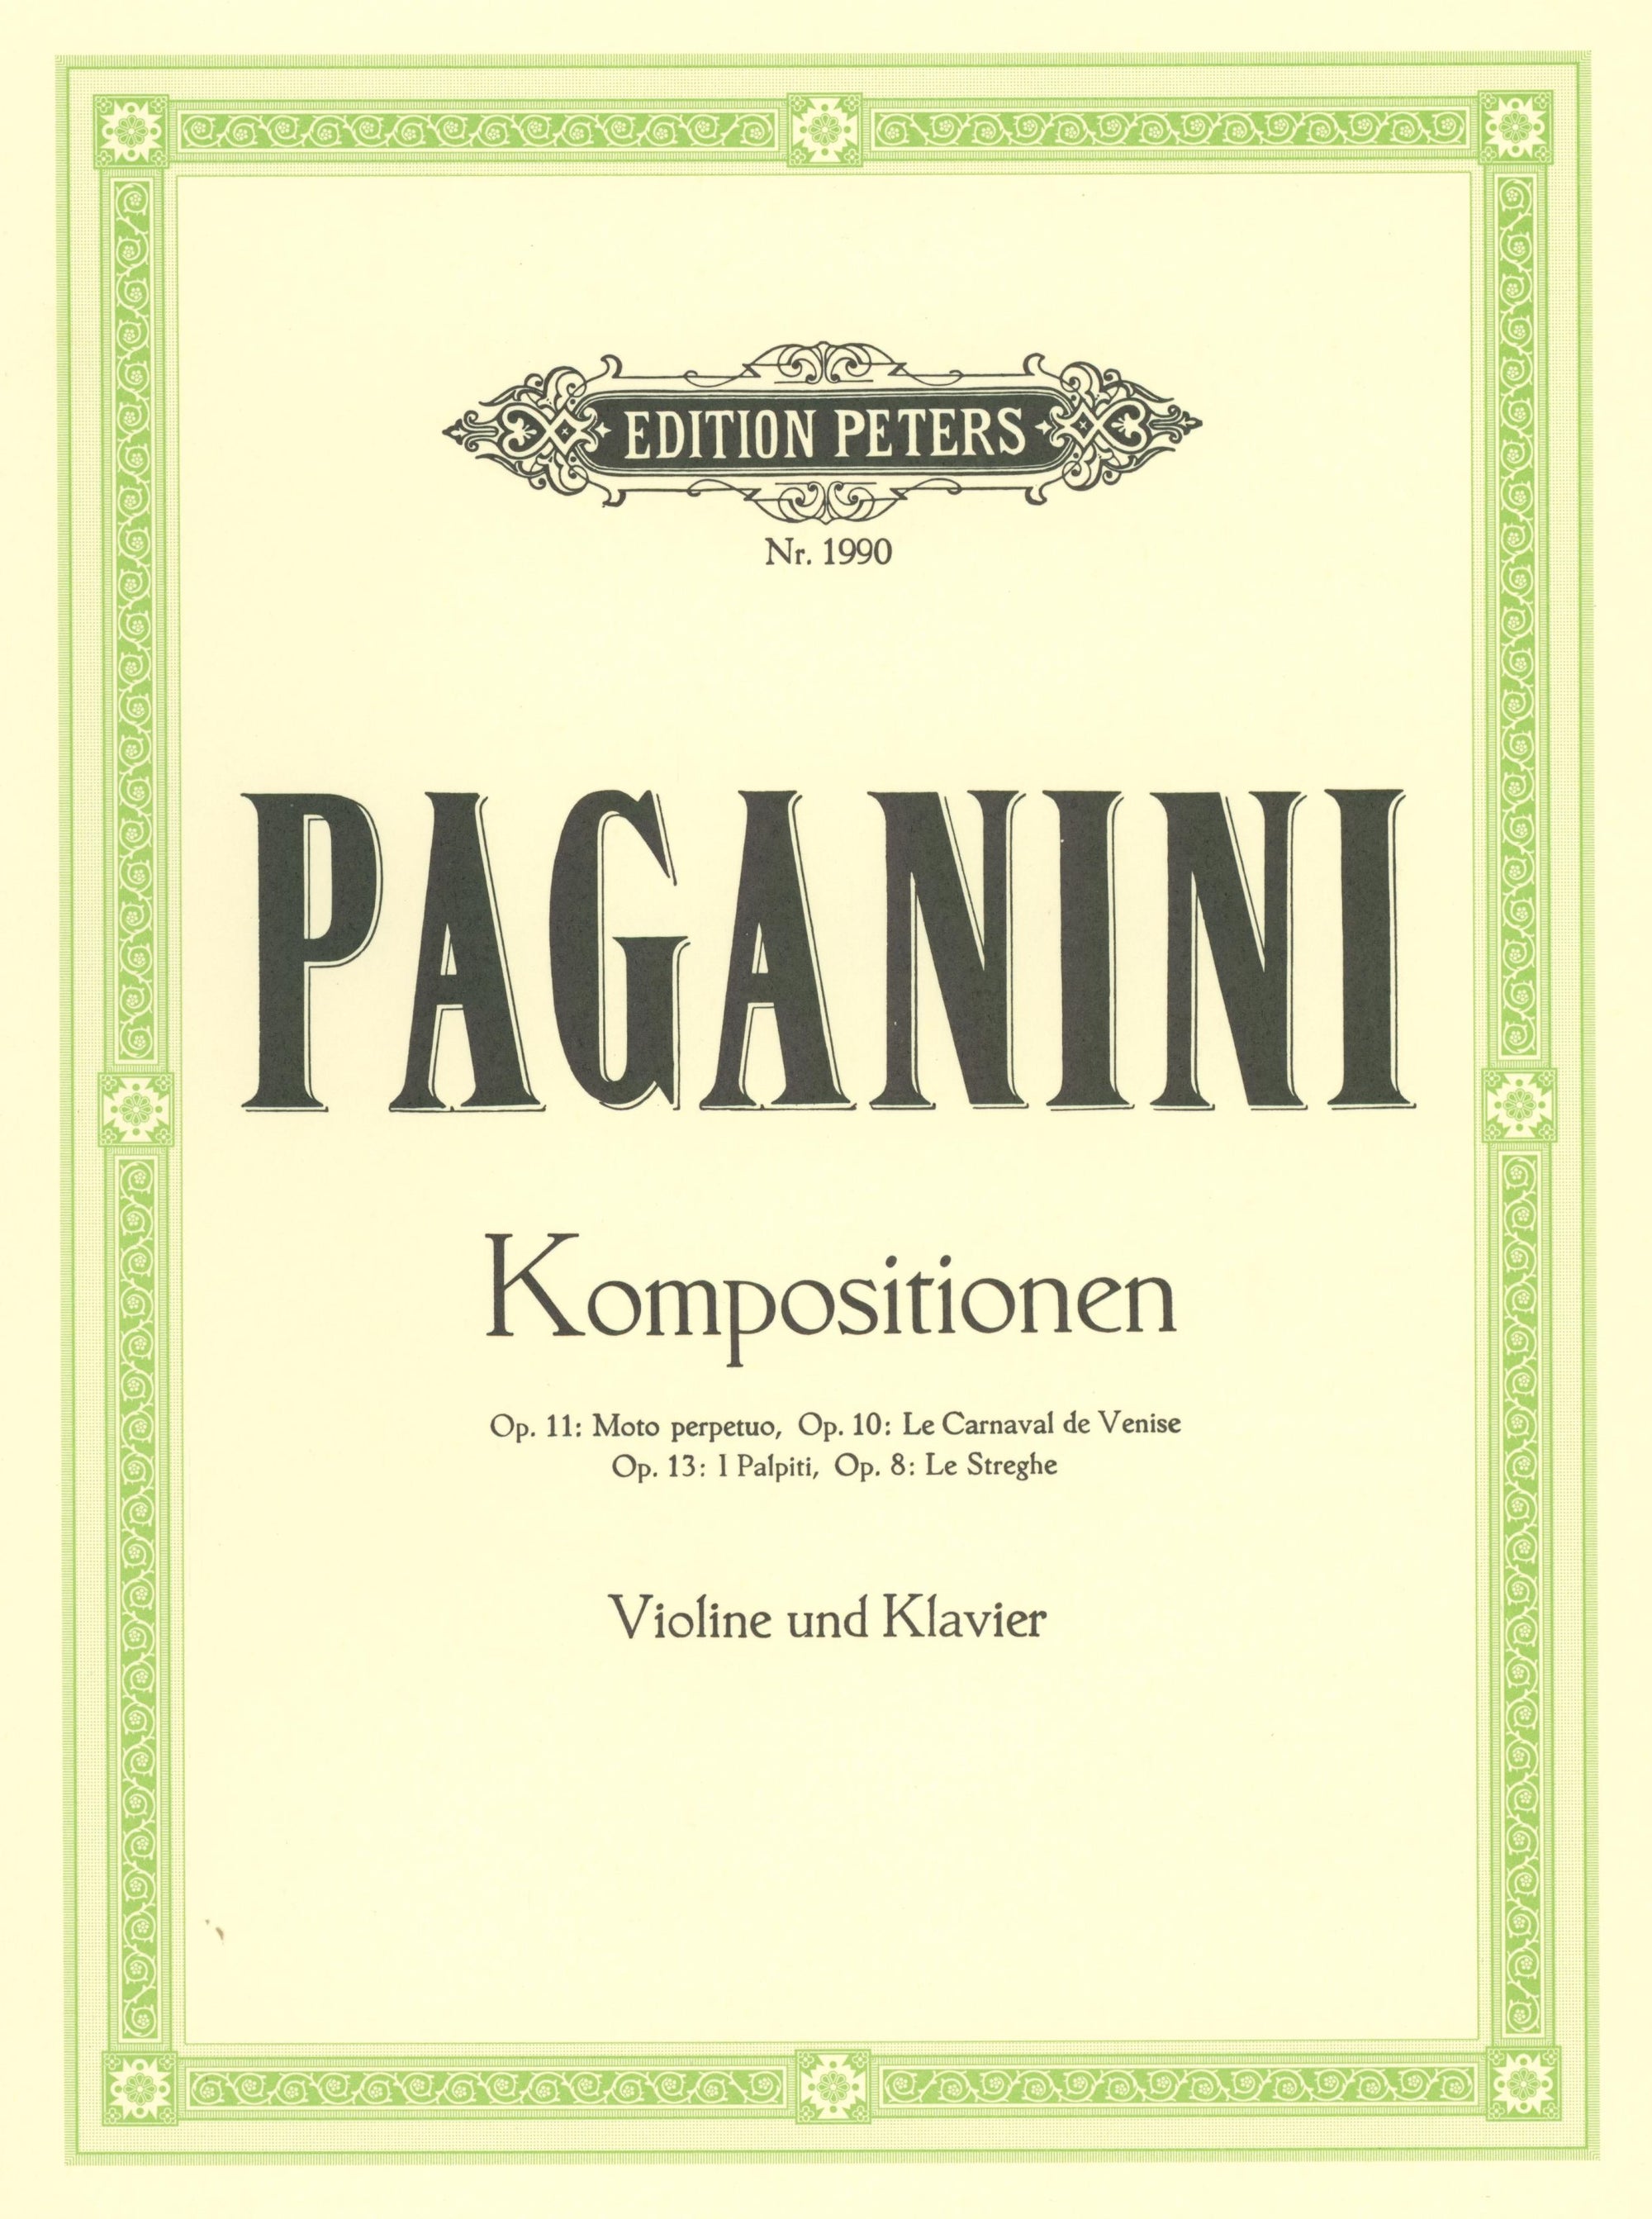 Paganini: Moto Perpetuo, Op. 11 - Ficks Music